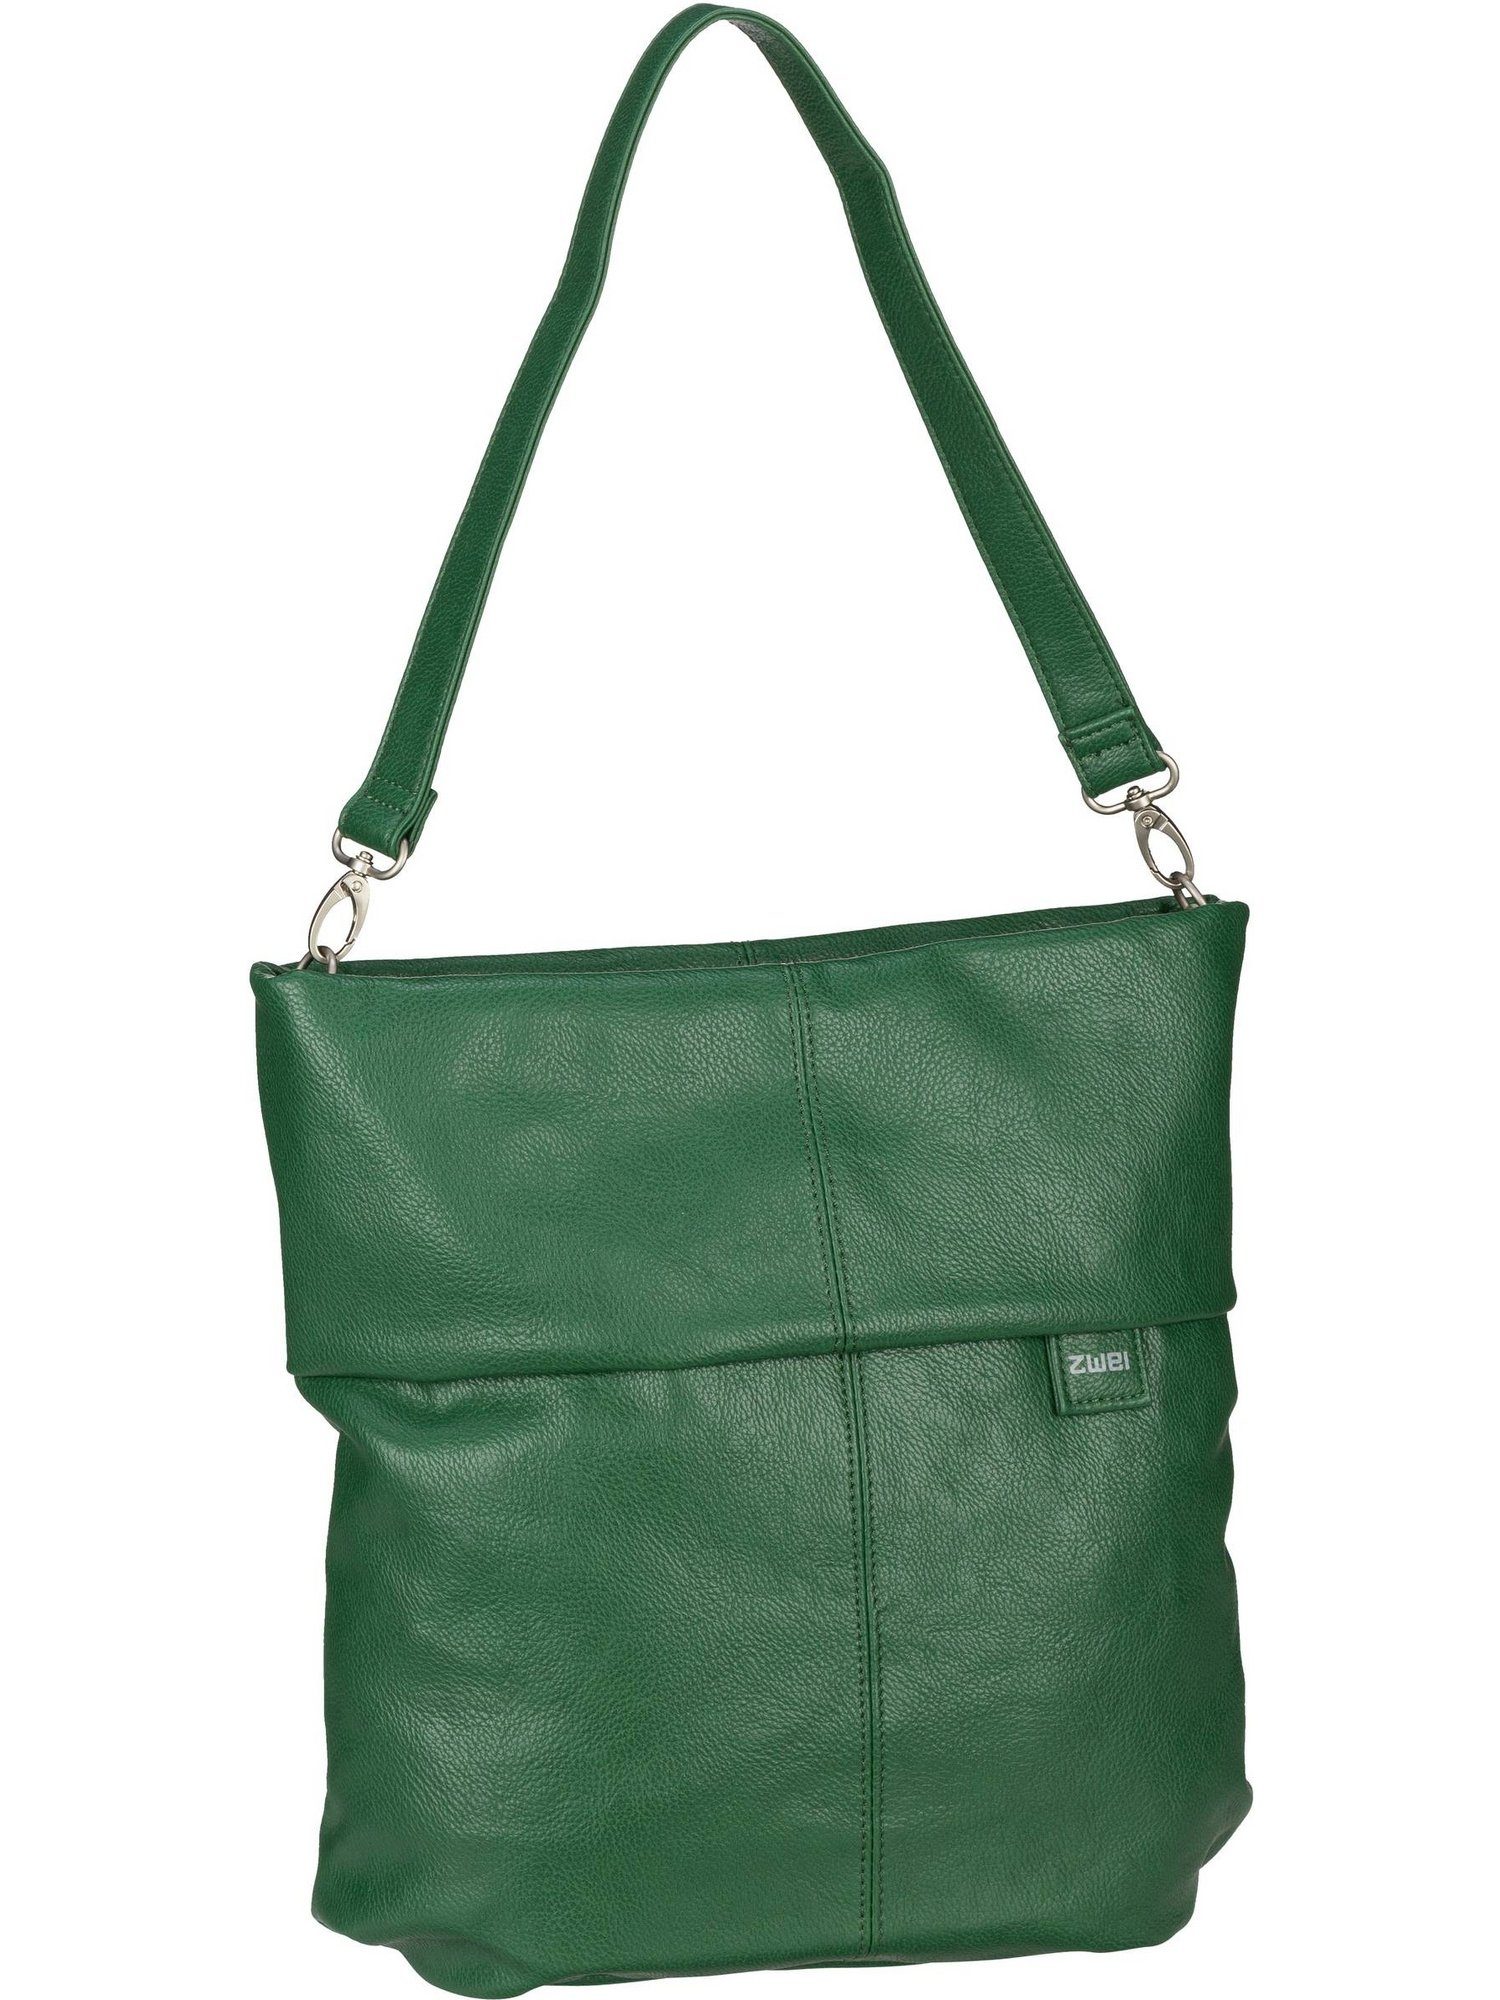 Bag Hobo Mademoiselle M12, Moos Zwei Handtasche